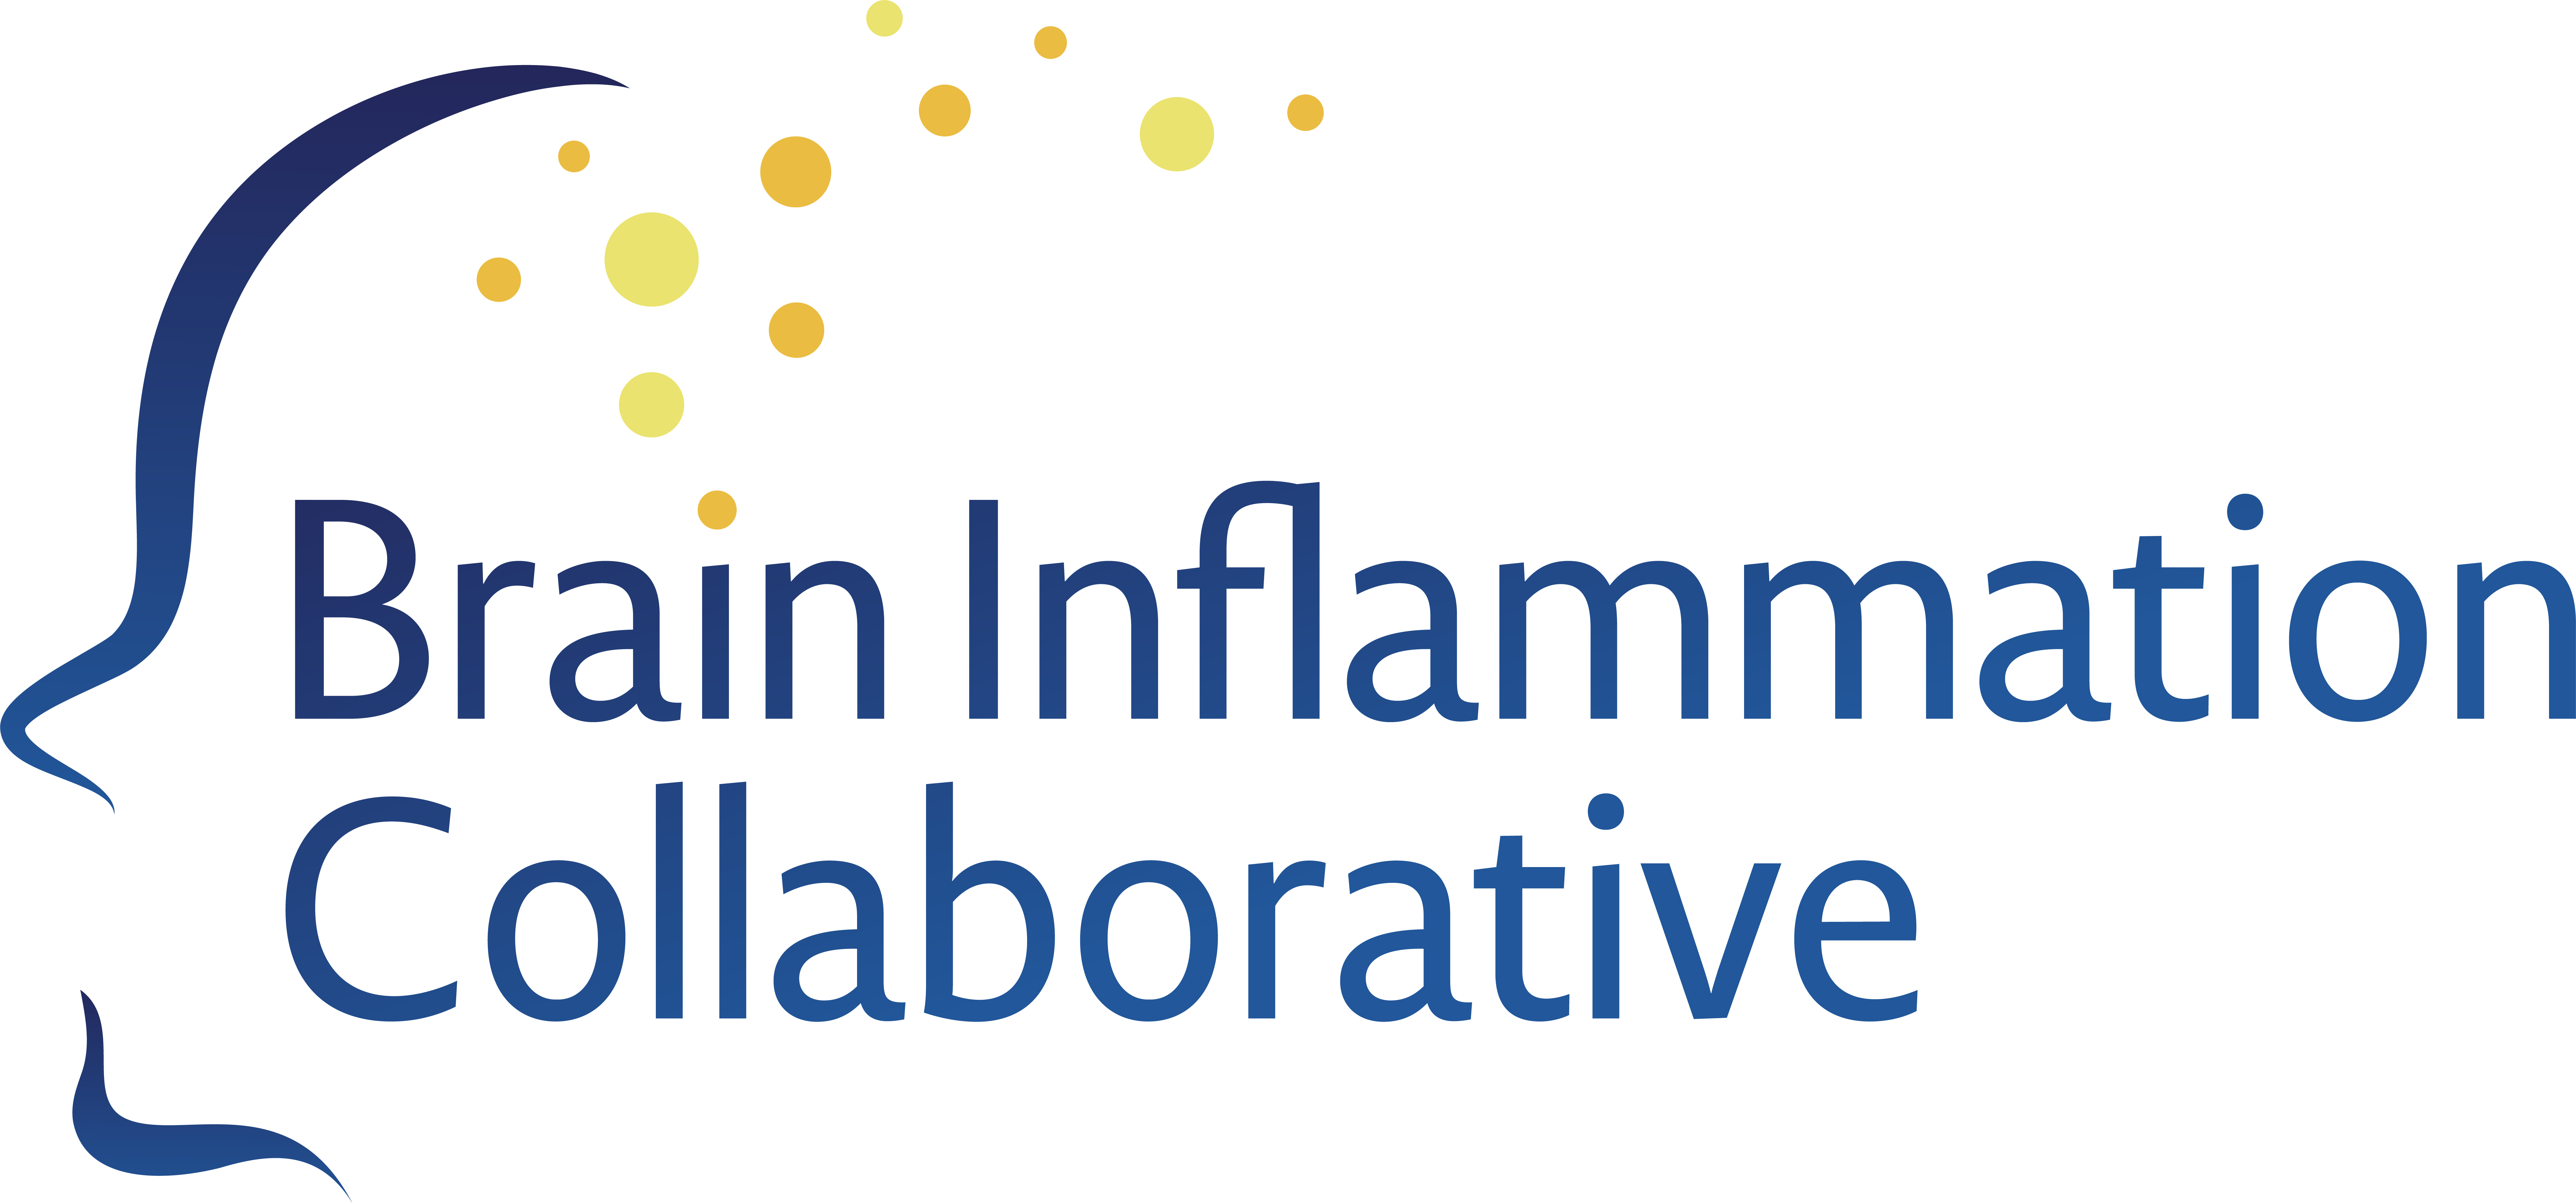 Brain Inflammation Collaborative